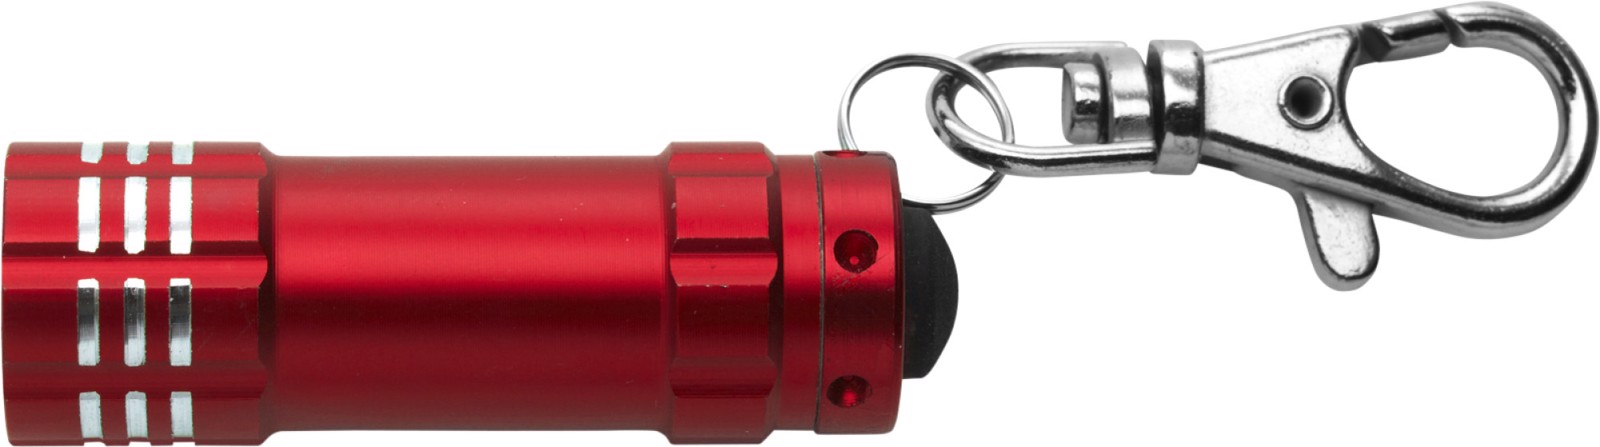 Aluminium 2-in-1 key holder - Red